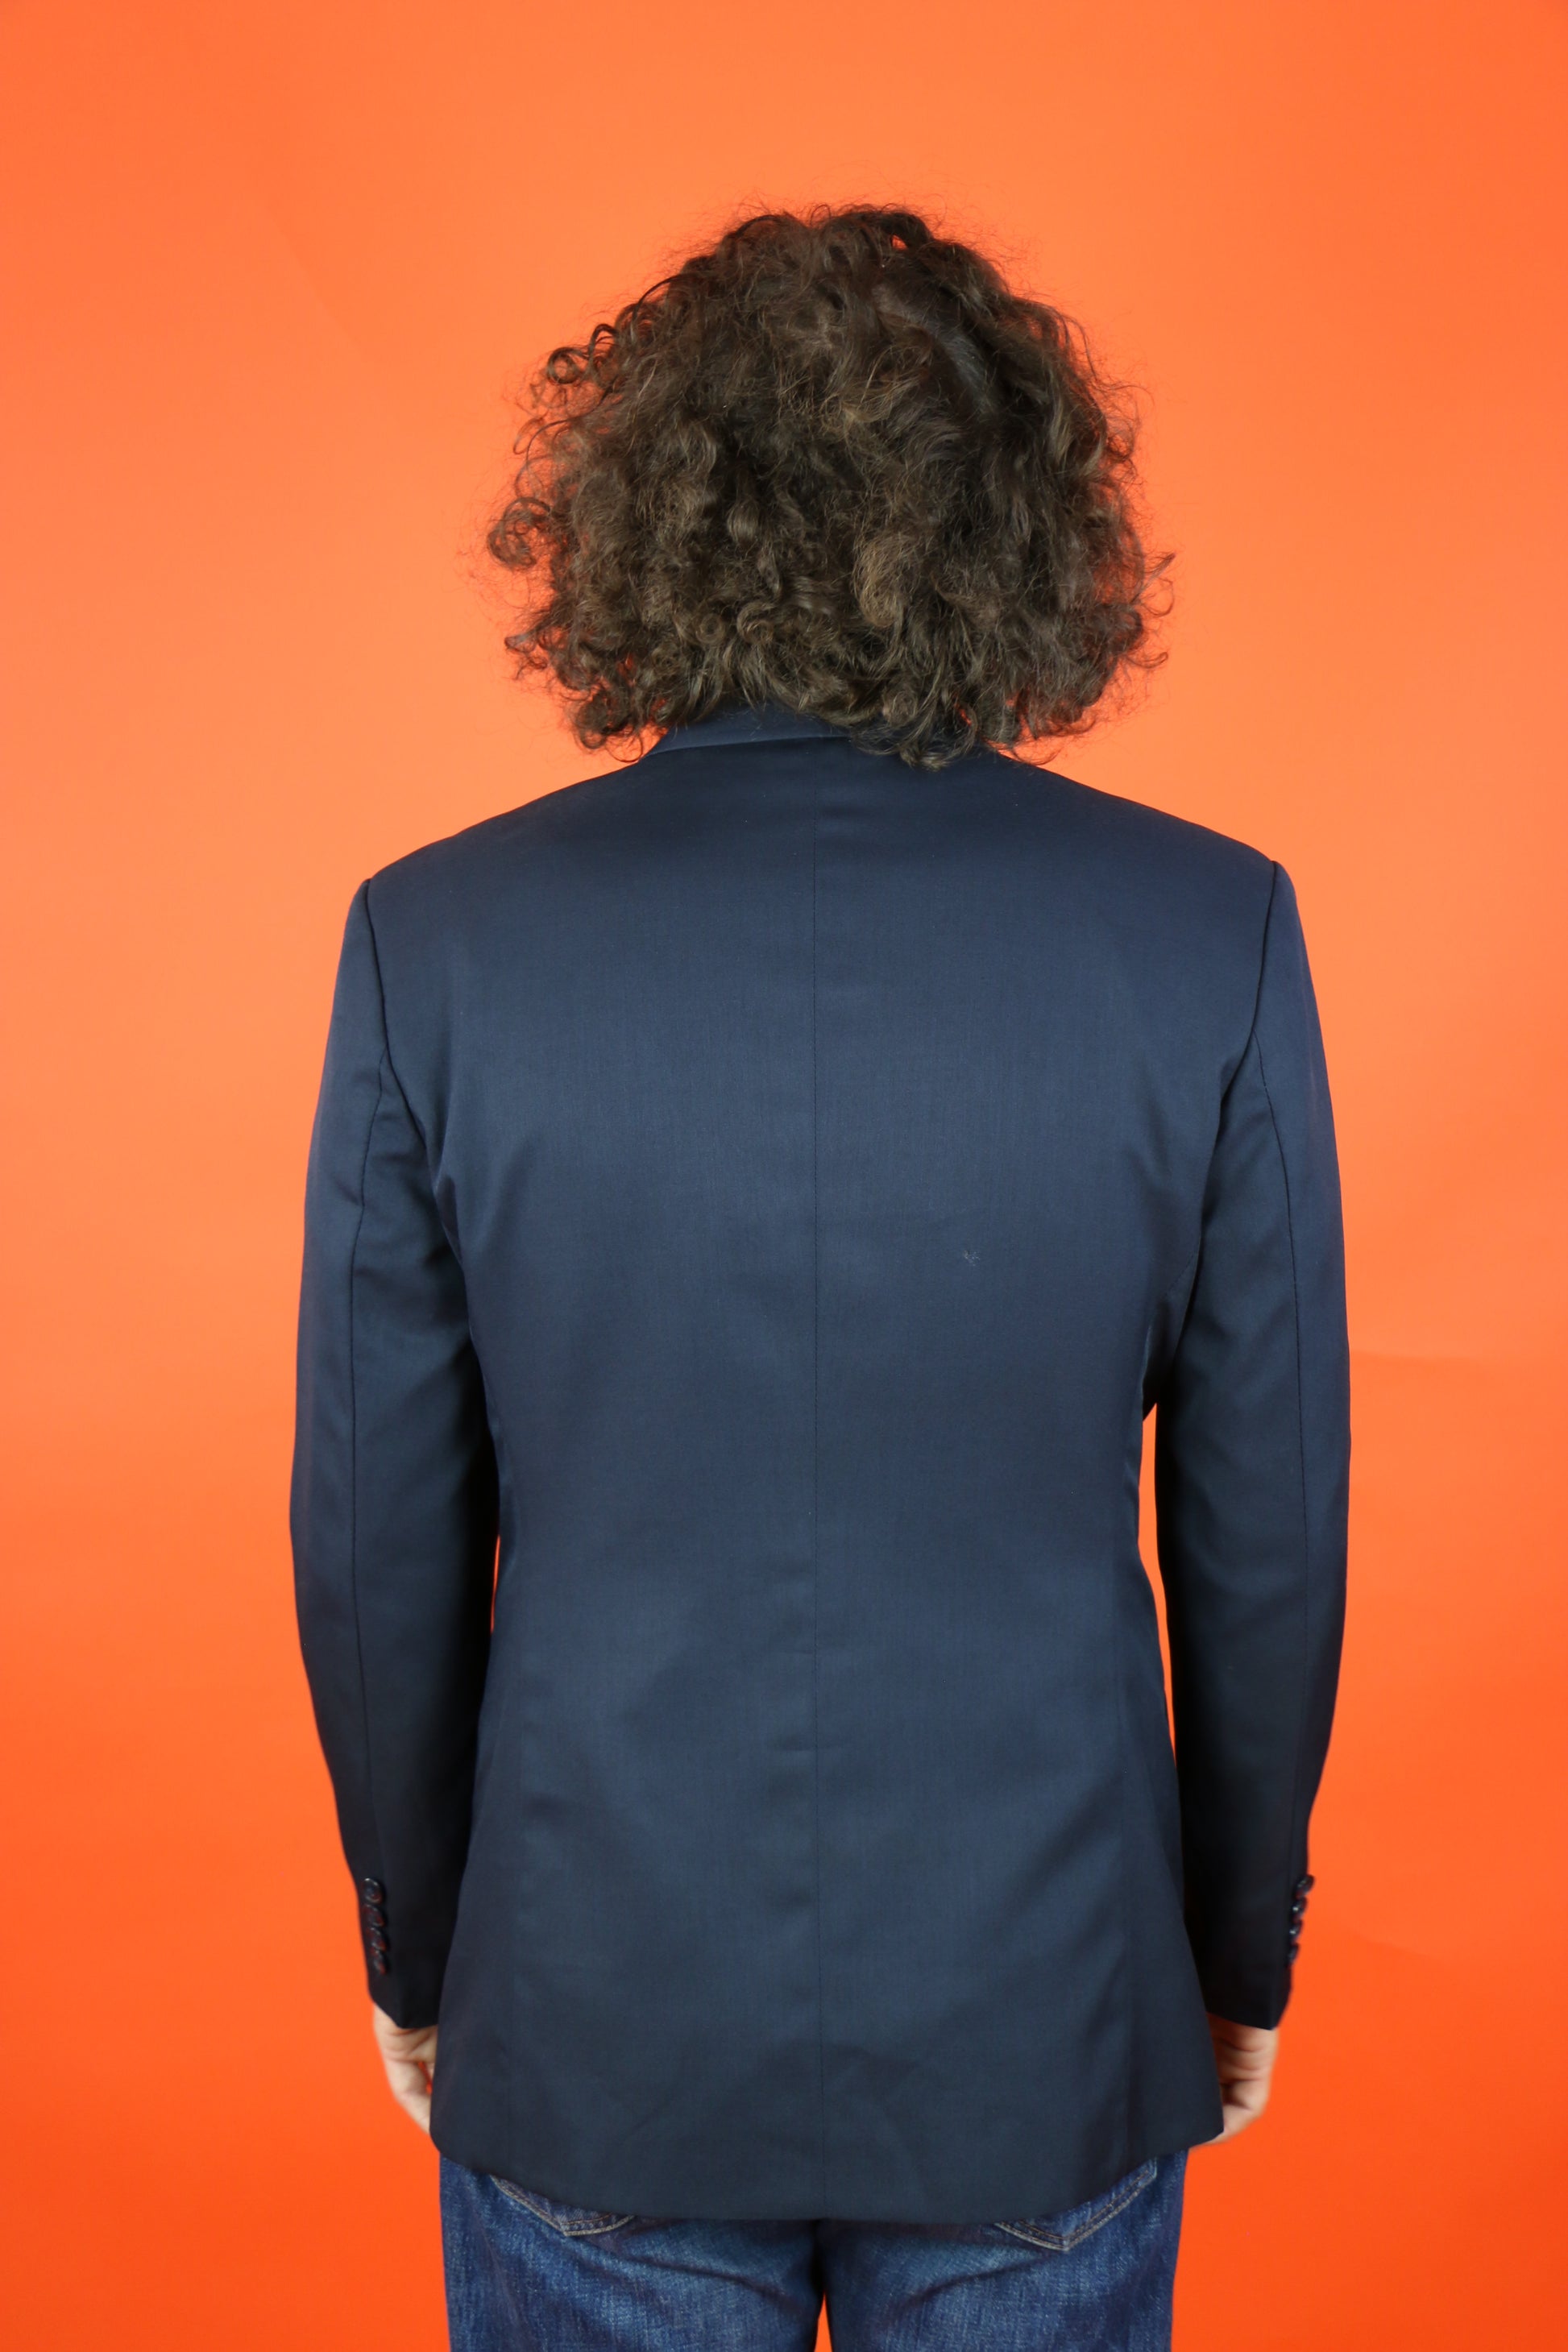 Hugo Boss Suit Jacket - vintage clothing clochard92.com